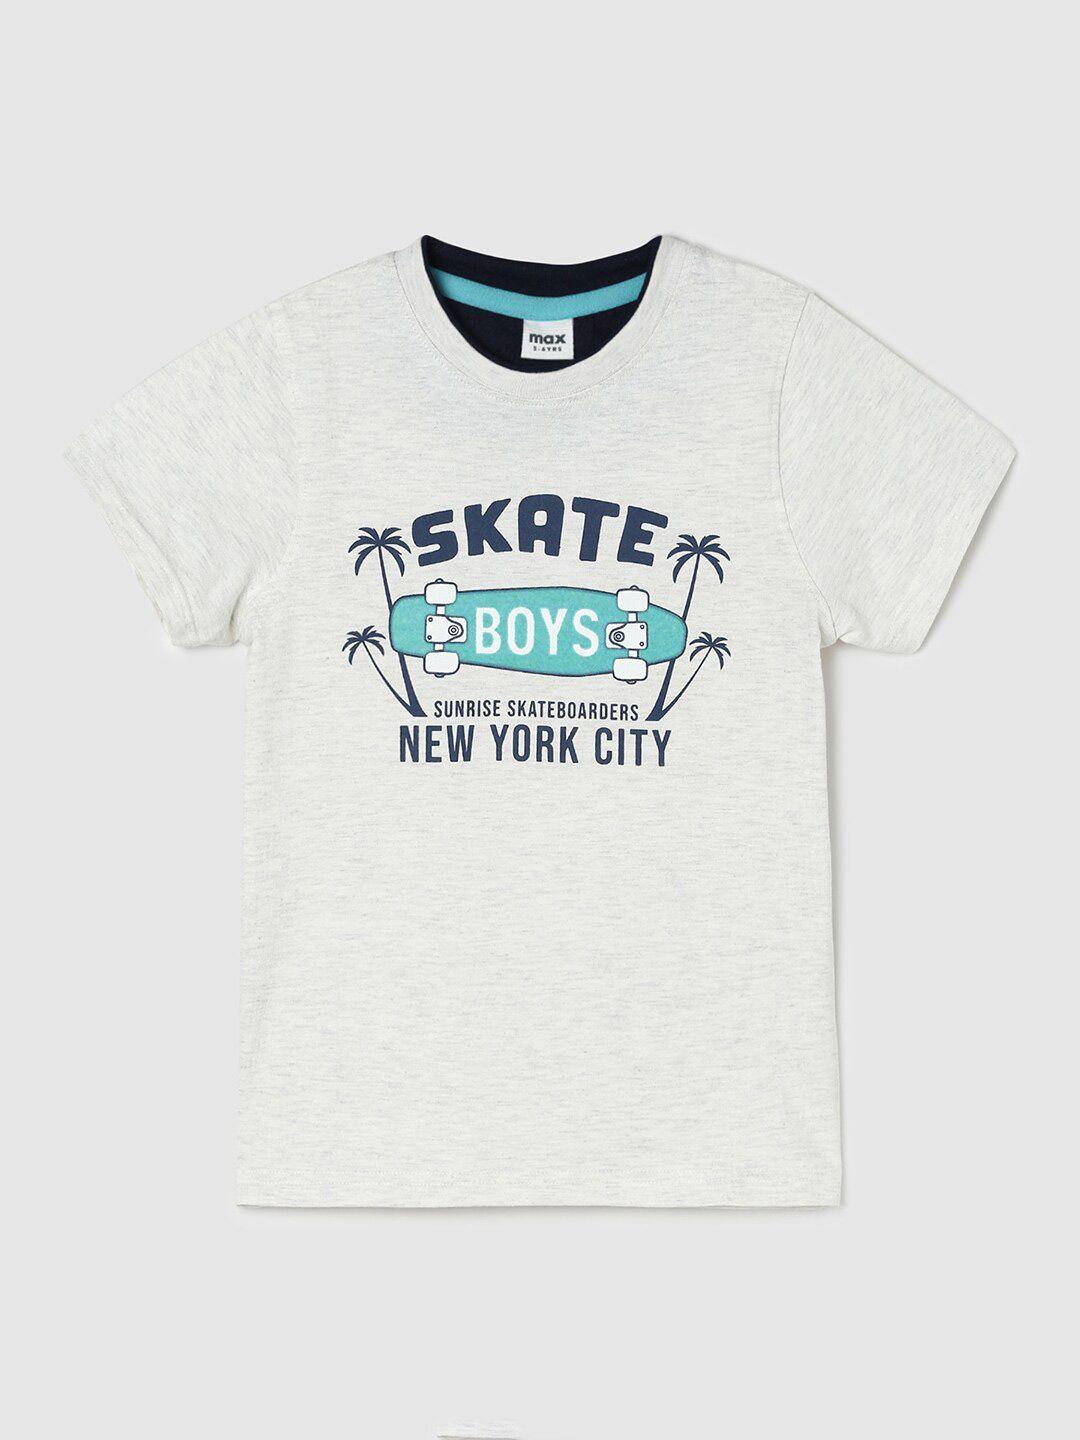 max Boys Typographic Printed Cotton T-Shirt